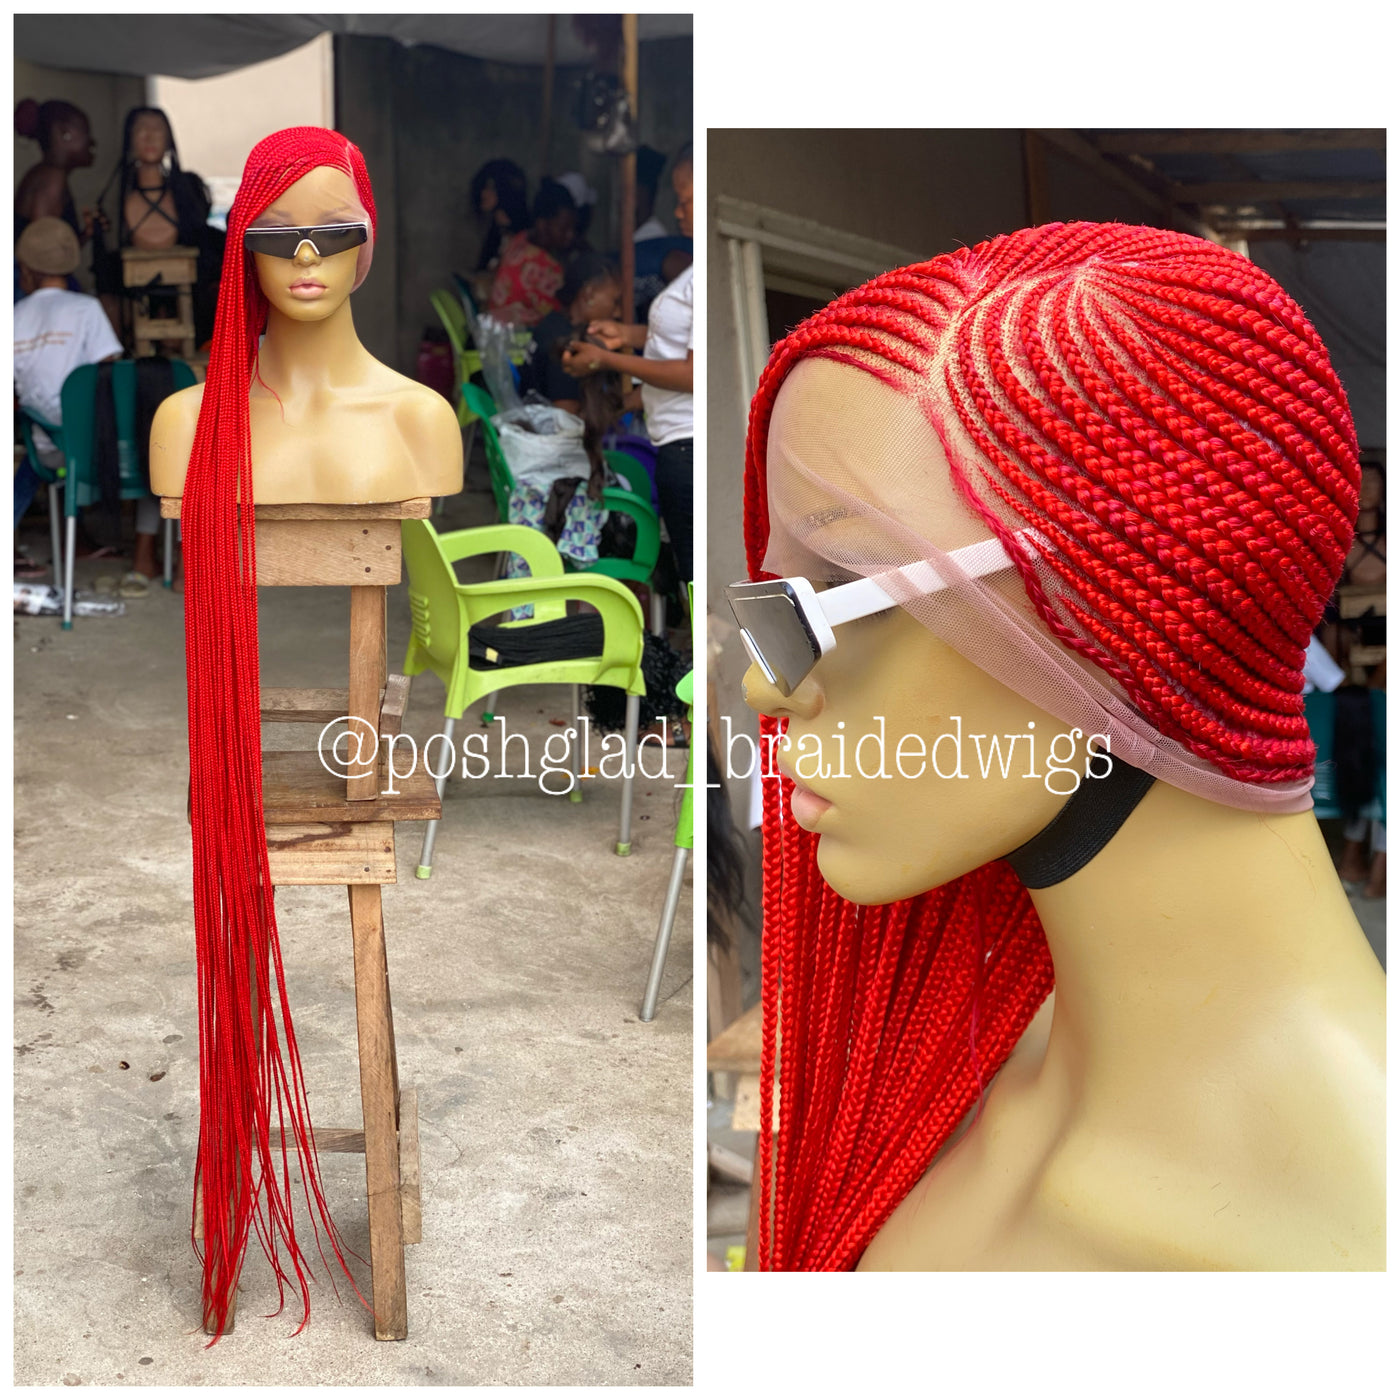 Cornrow Braid Wig - Premium Red Calf Length - Juliana Poshglad Braided Wigs Cornrow Braid Wig